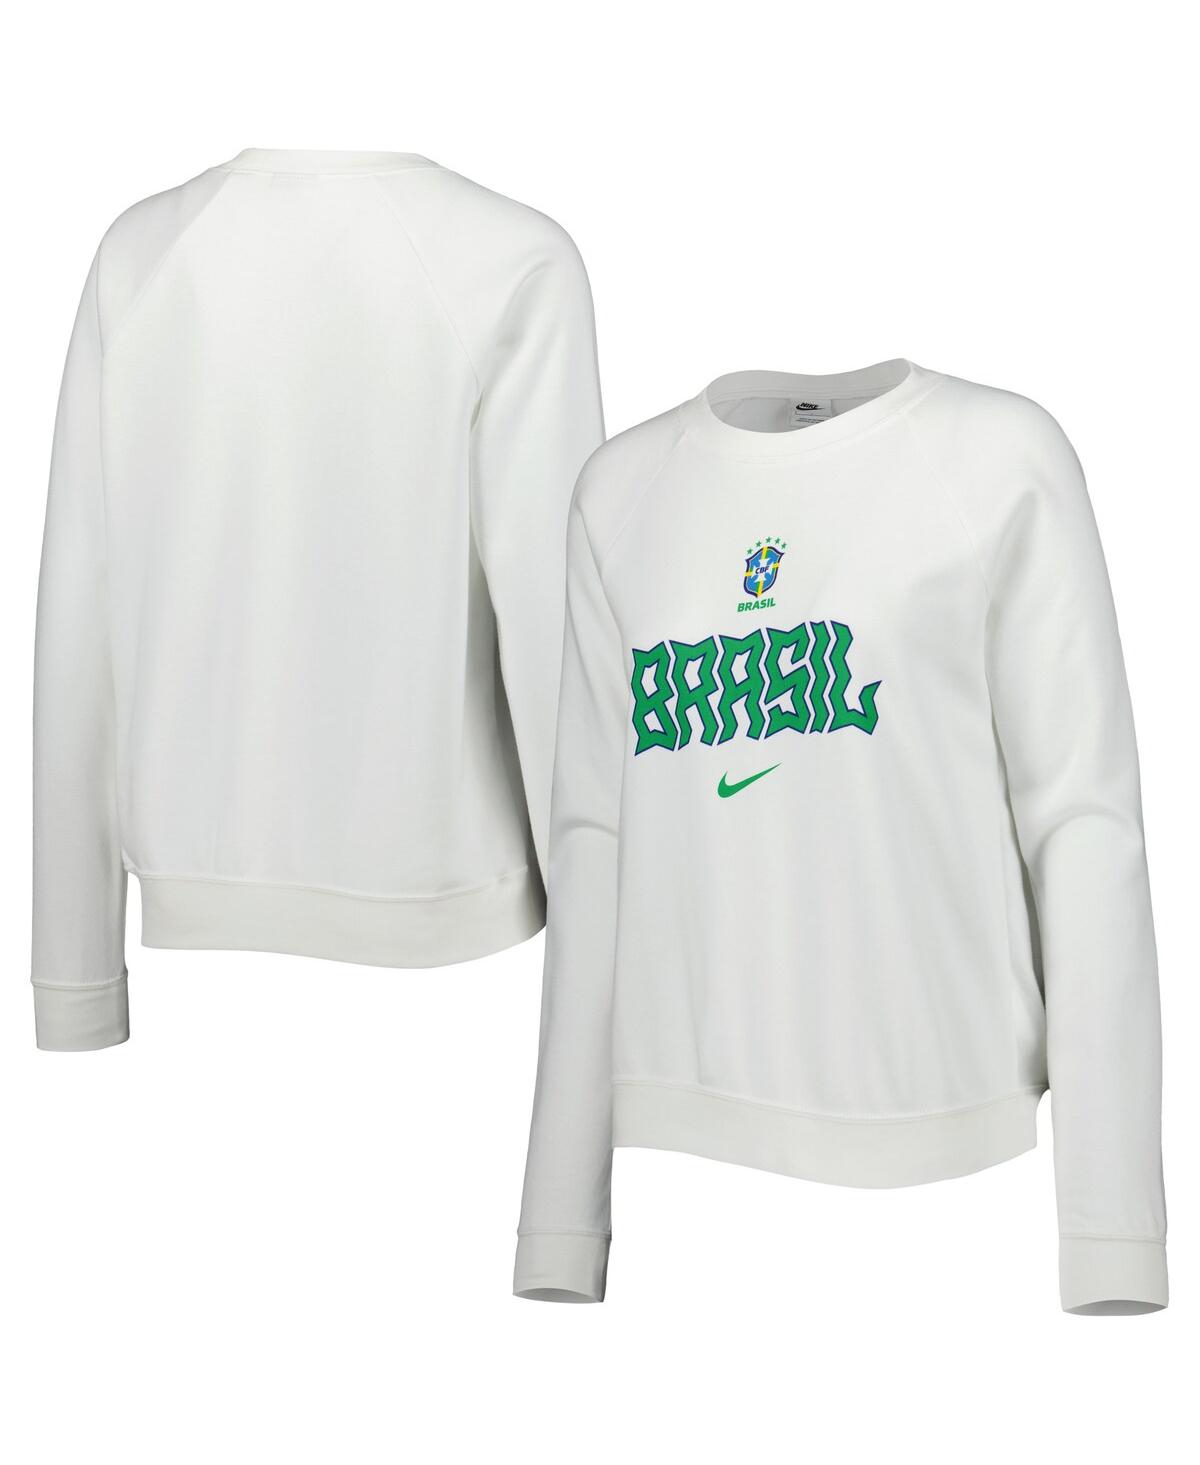 Women's Nike White Brazil National Team Lockup Varsity Raglan Pullover Sweatshirt - White